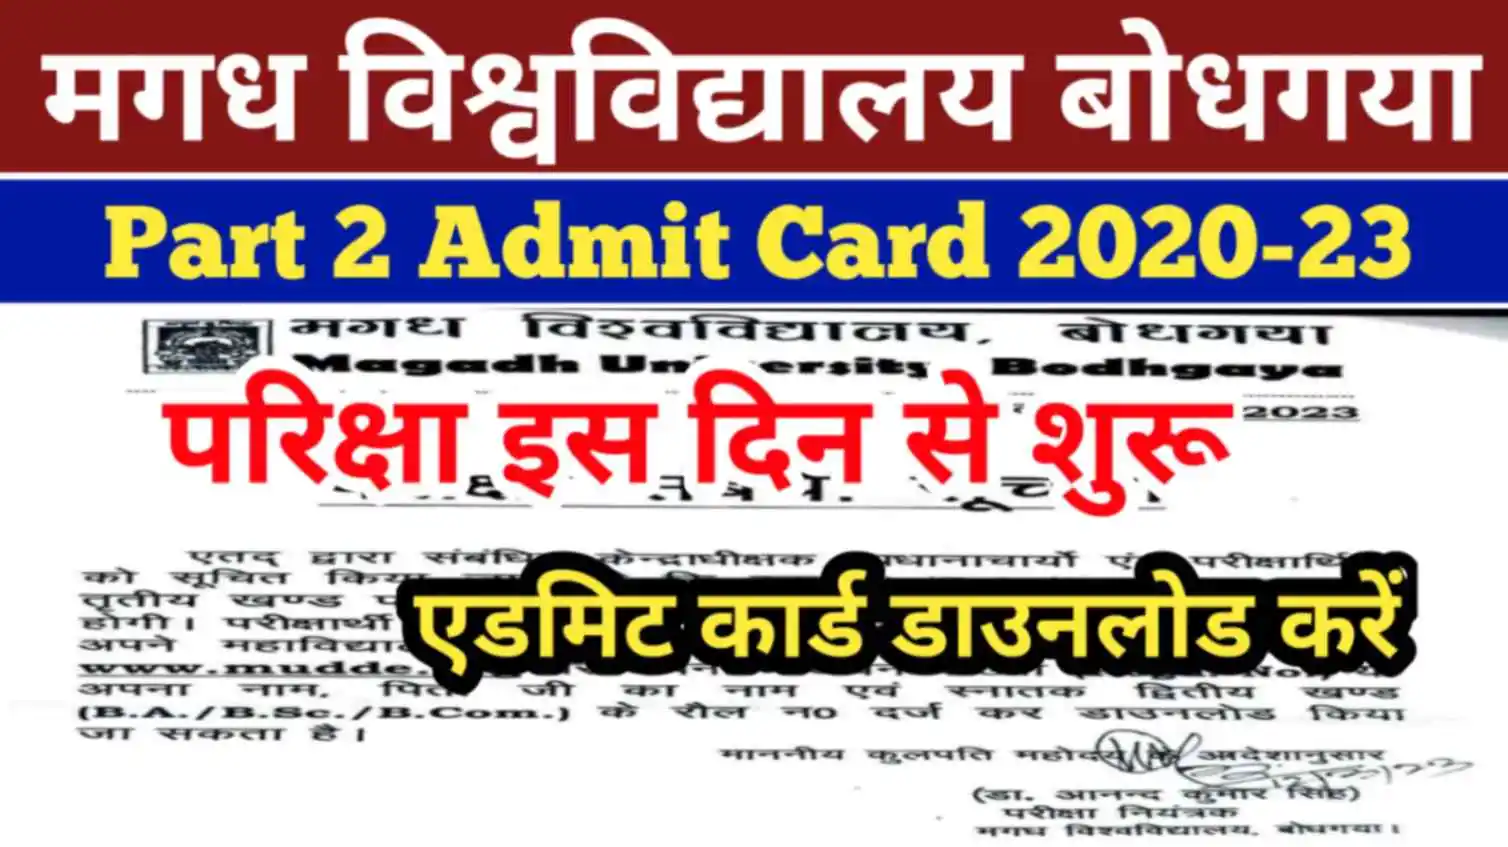 Magadh University Part 2 Admit Card 2020-23